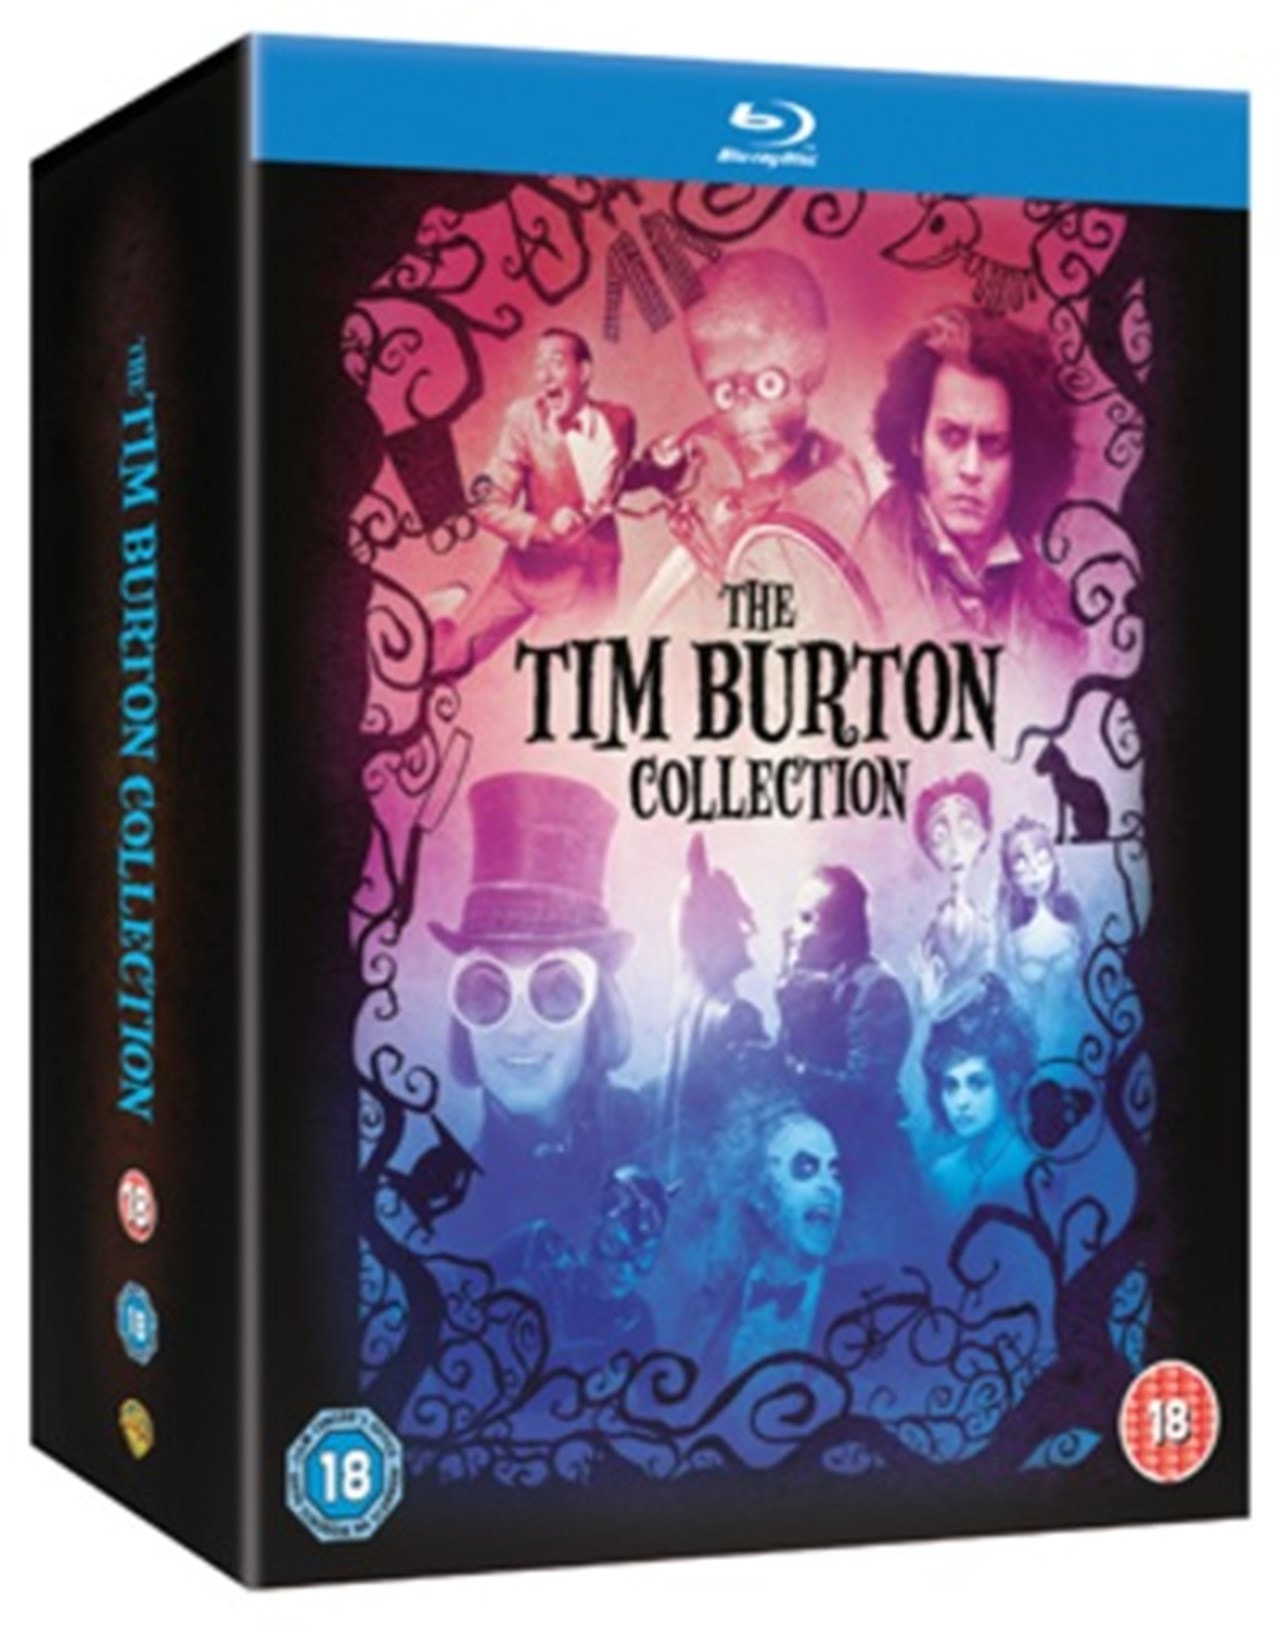 The Tim Burton Collection Blu Ray Box Set Free Shipping Over 20